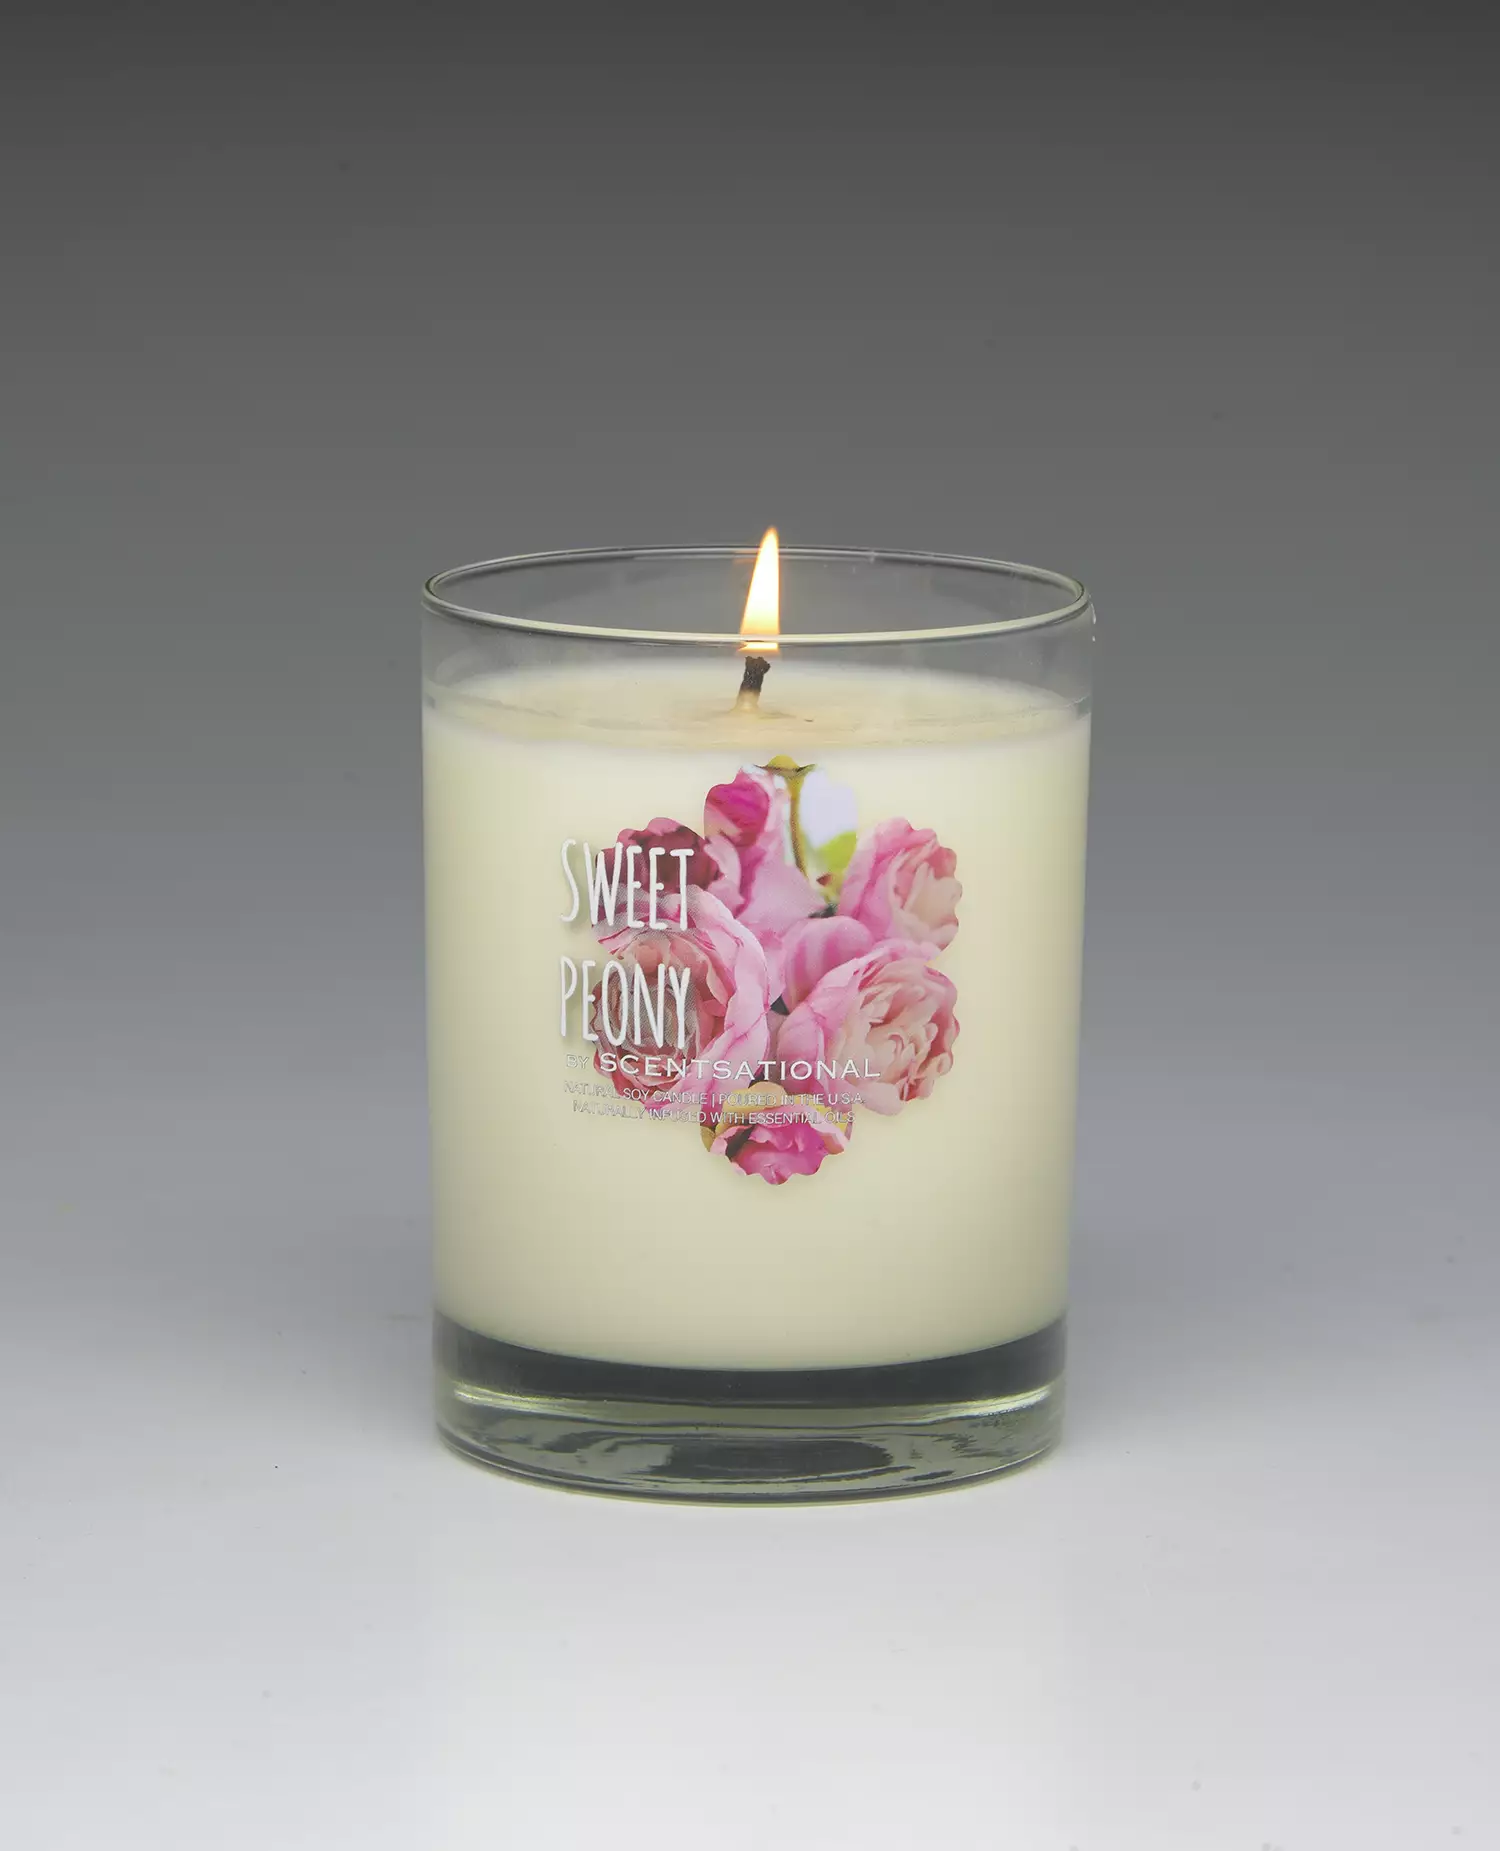 Sweet Peony – 11oz scented candle burning